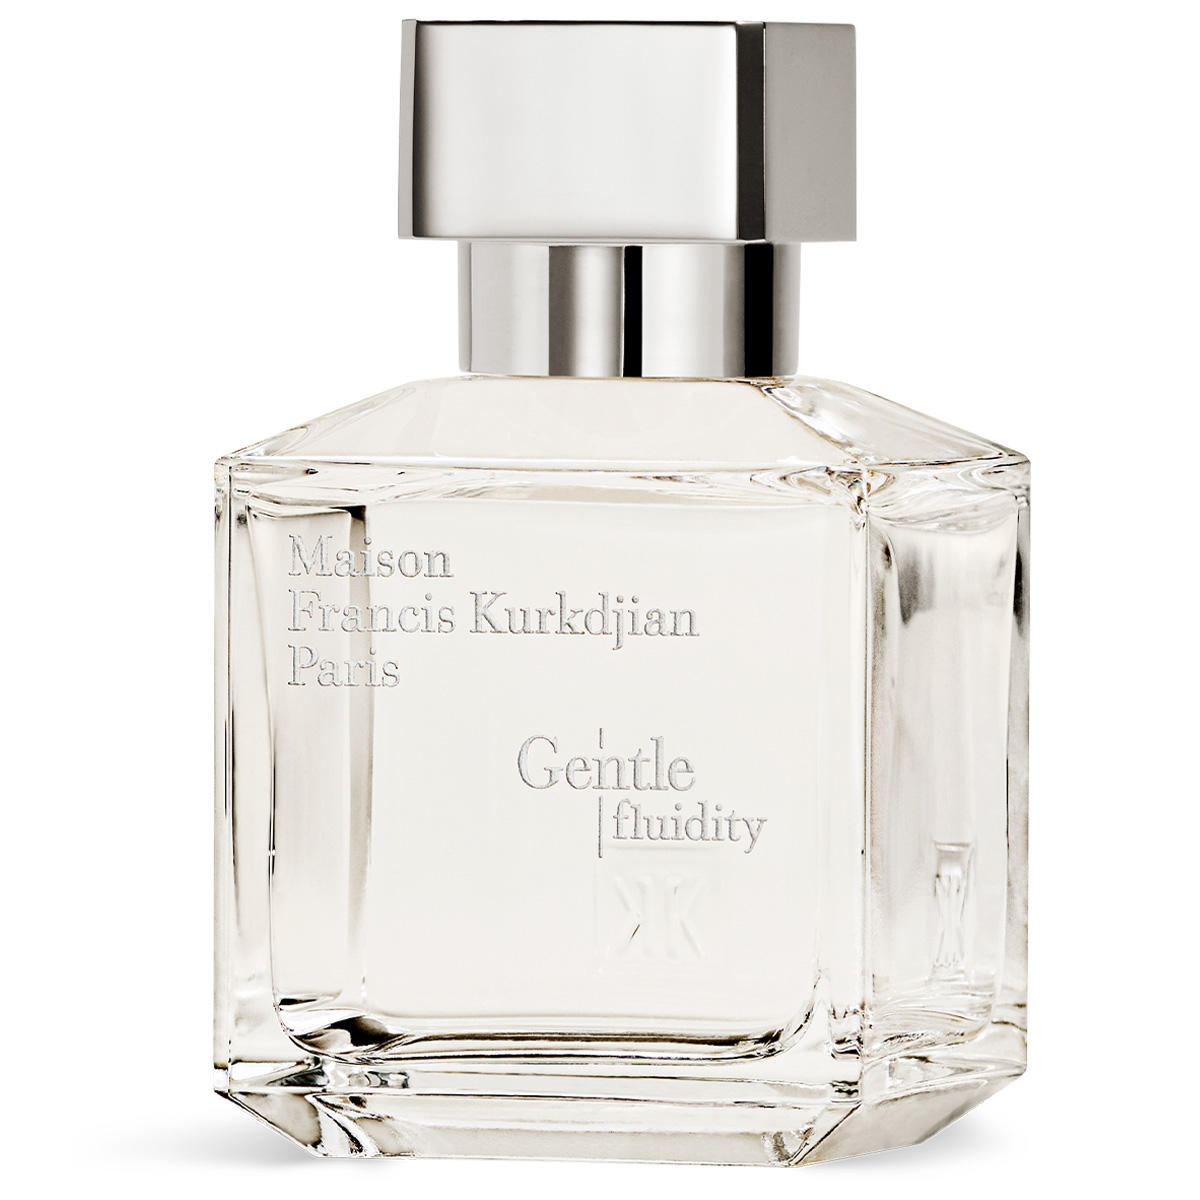 Maison Francis Kurkdjian Paris Gentle fluidity Silver Eau de Parfum 70 ml - 3